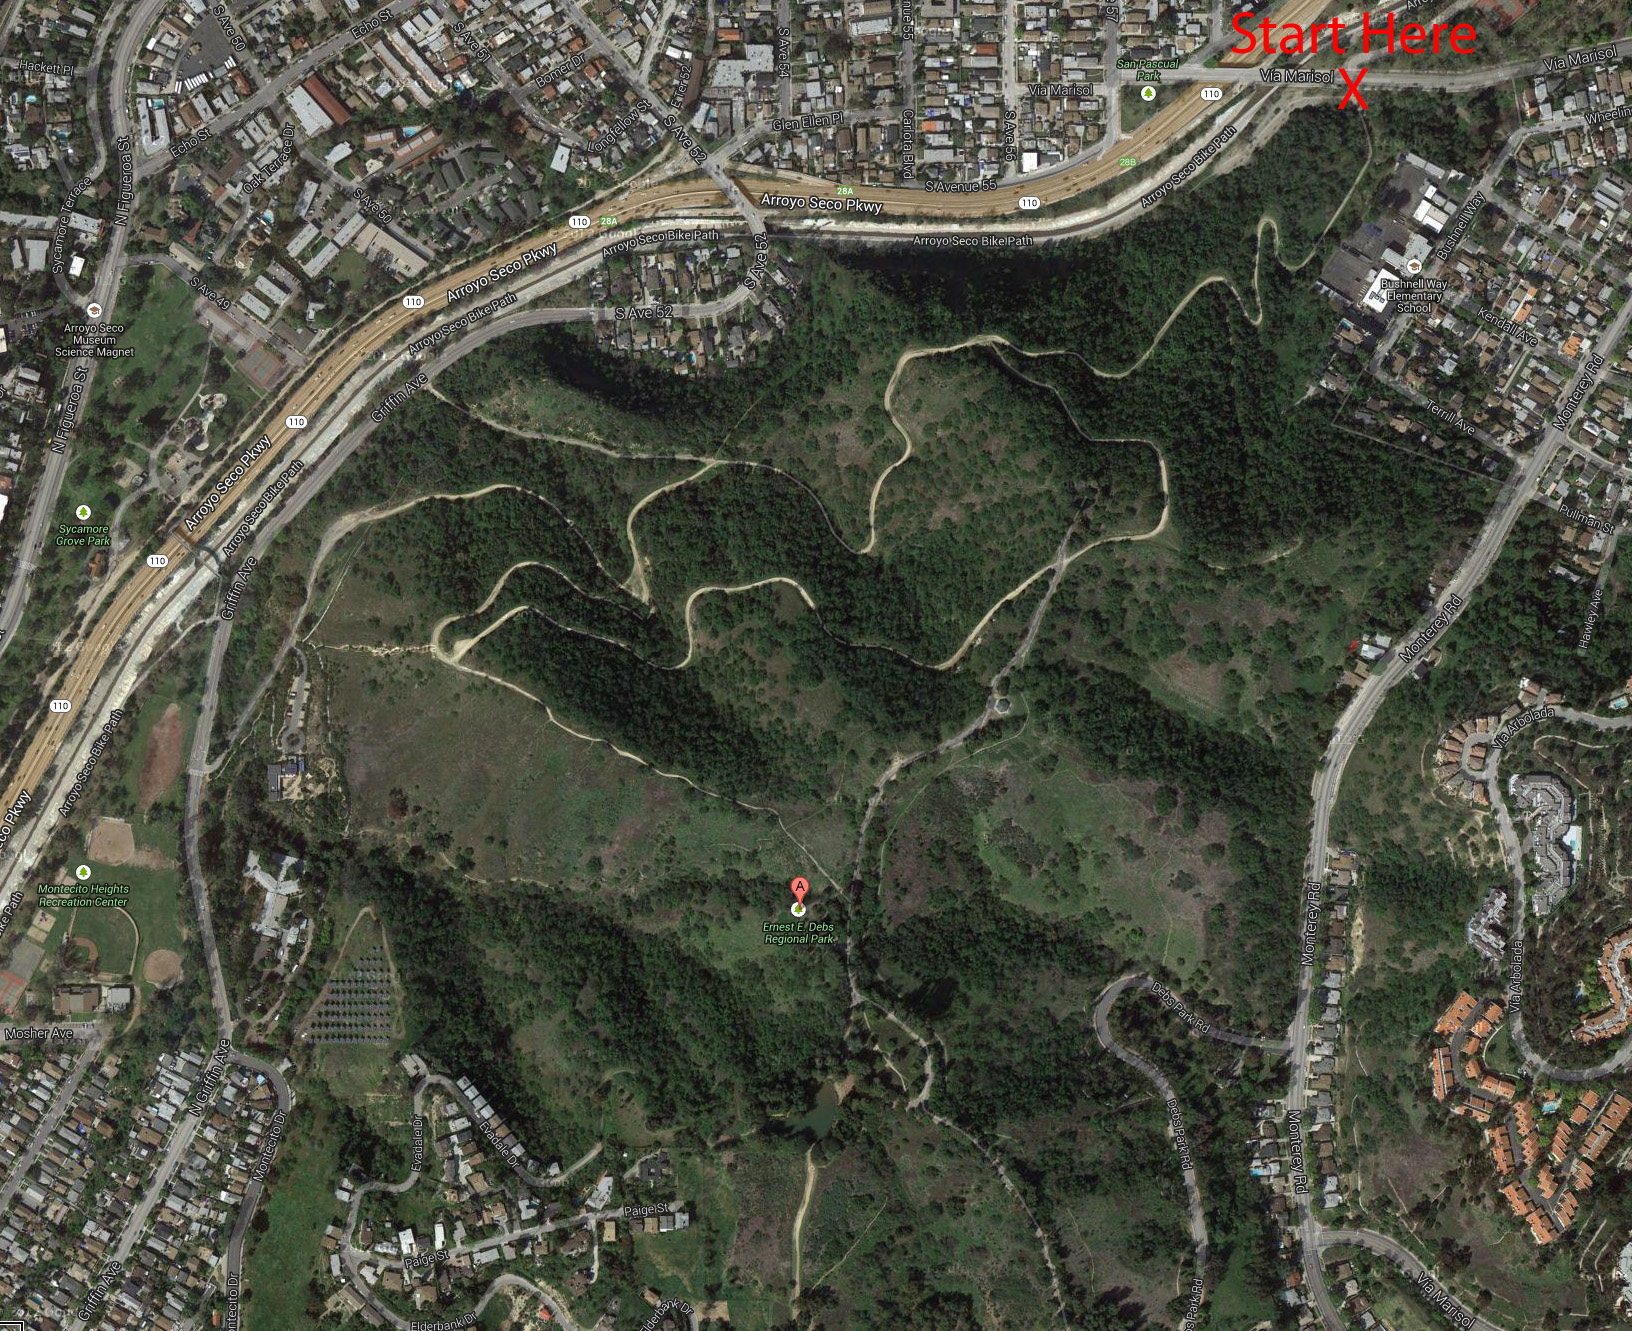 Titan Hill (course photo - satellite)